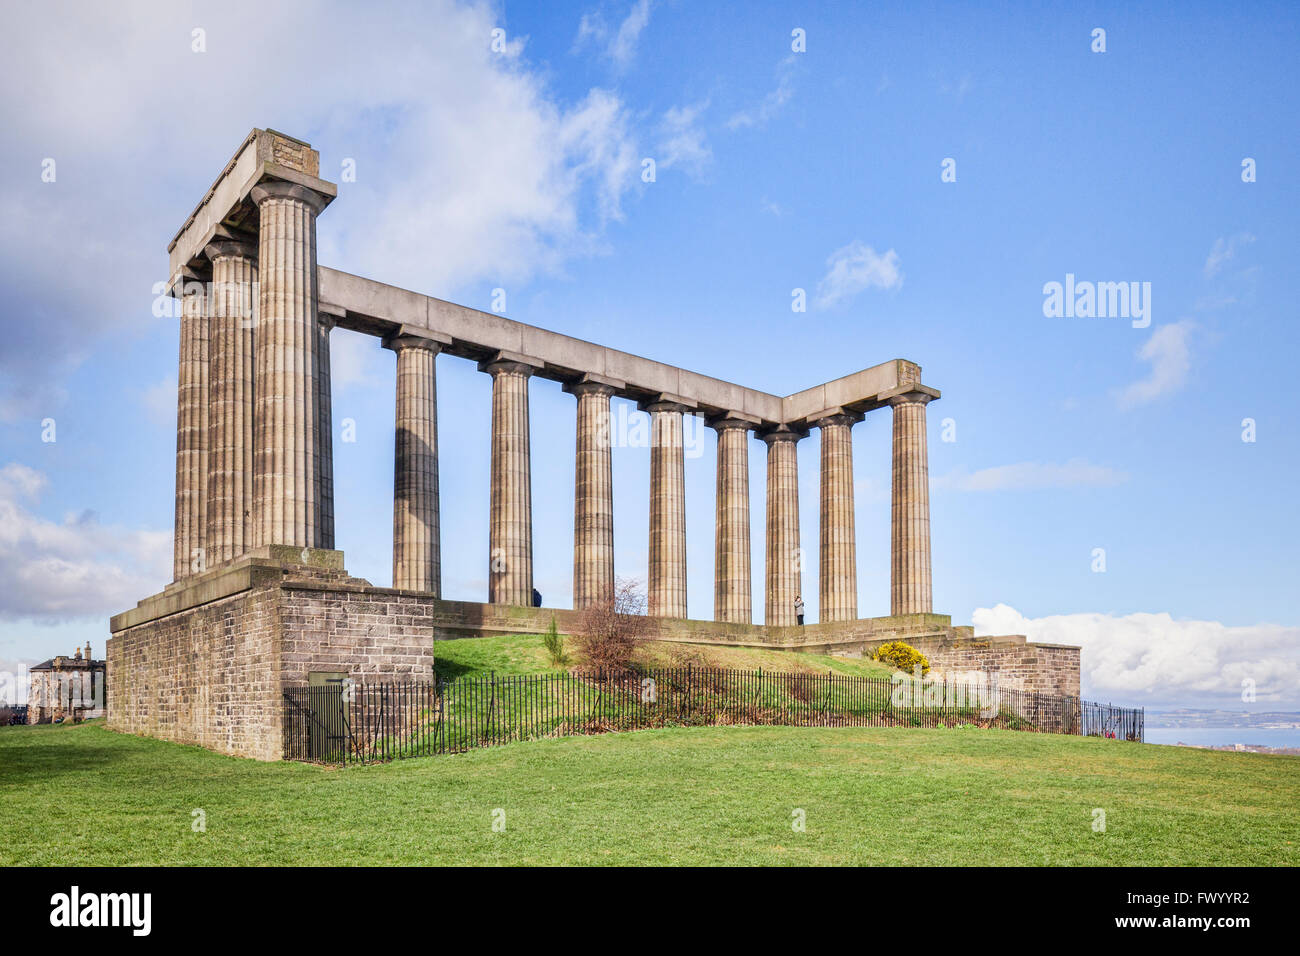 The National Monument on Calton Hill, Edinburgh, Scotland. Stock Photo